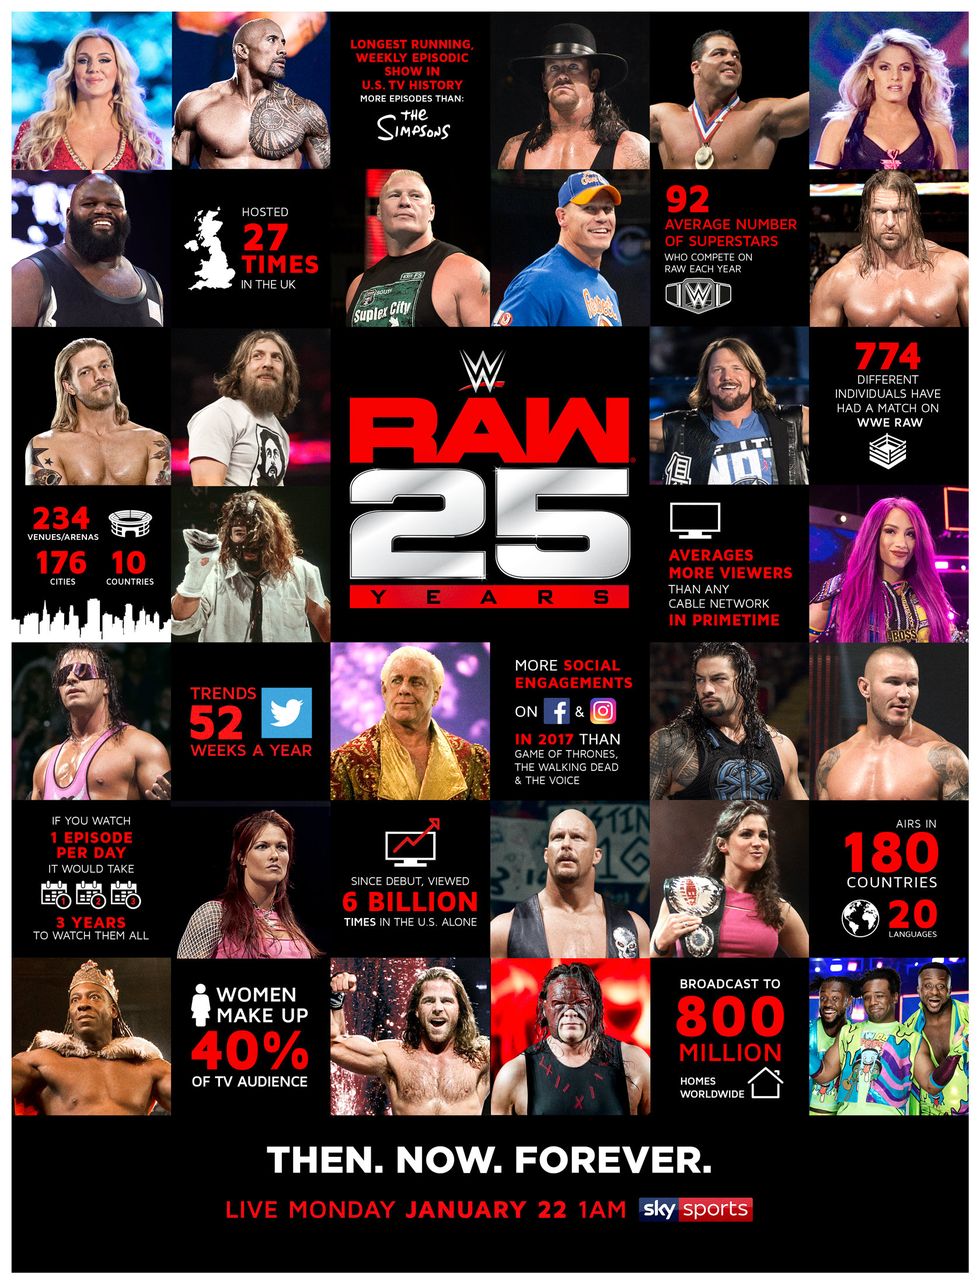 Monday Night Raw 25th Anniversary Photos